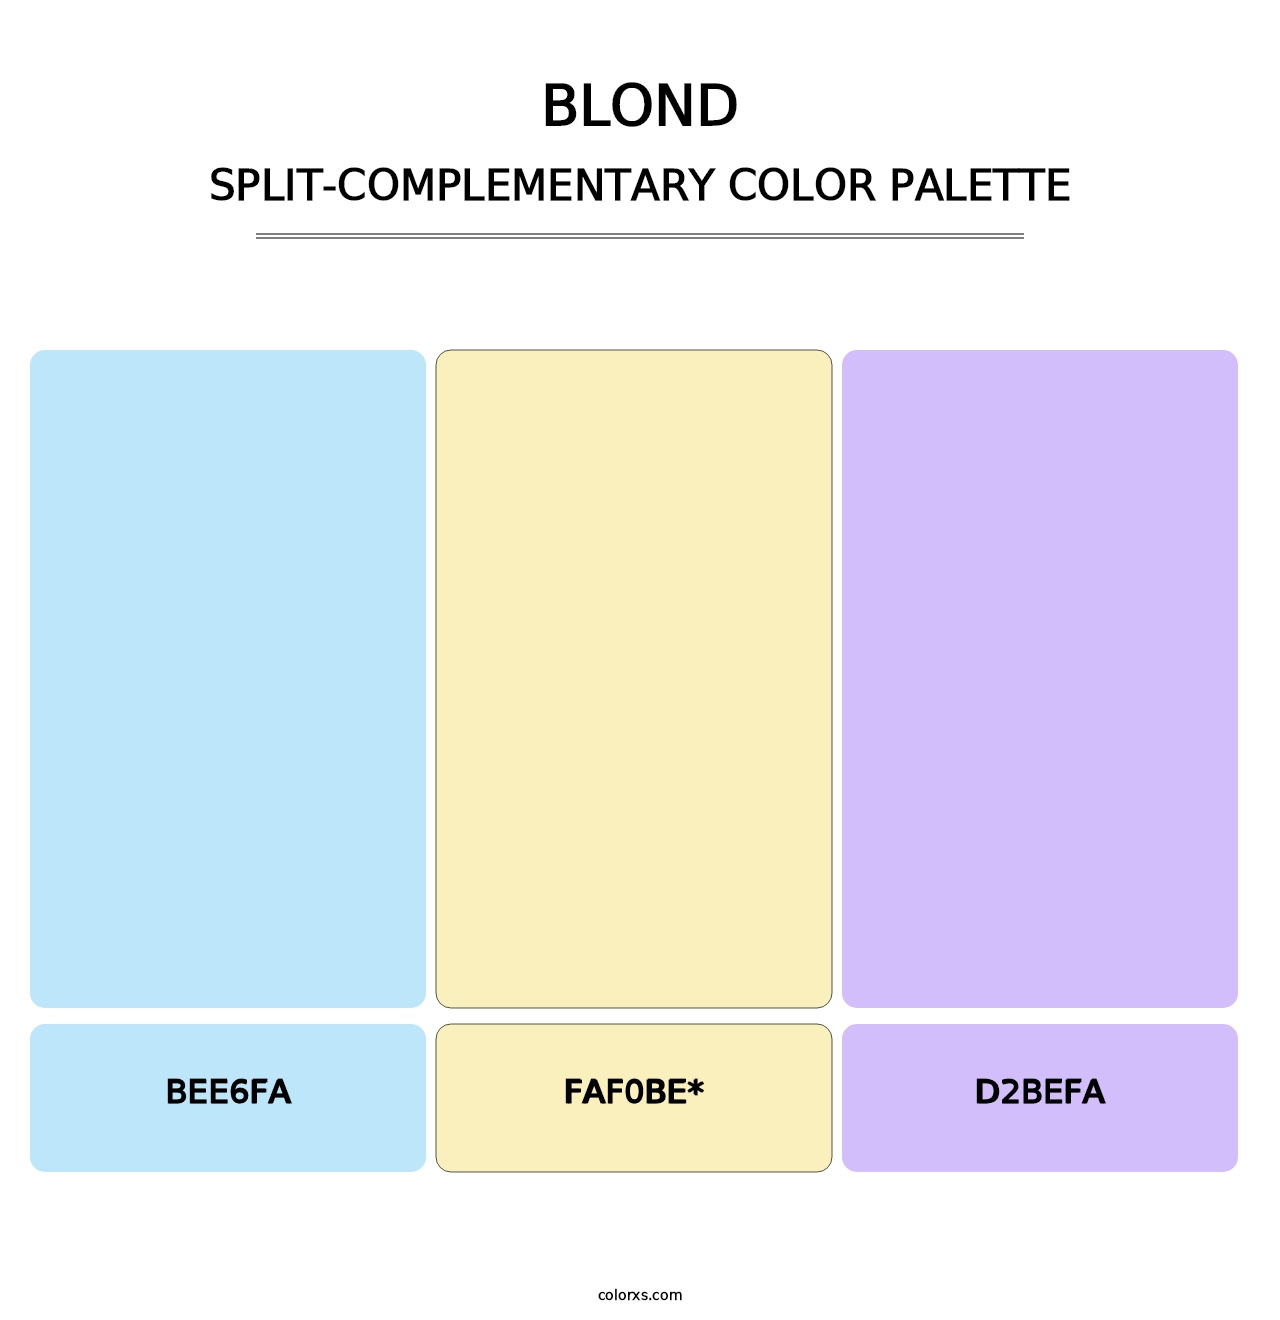 Blond - Split-Complementary Color Palette